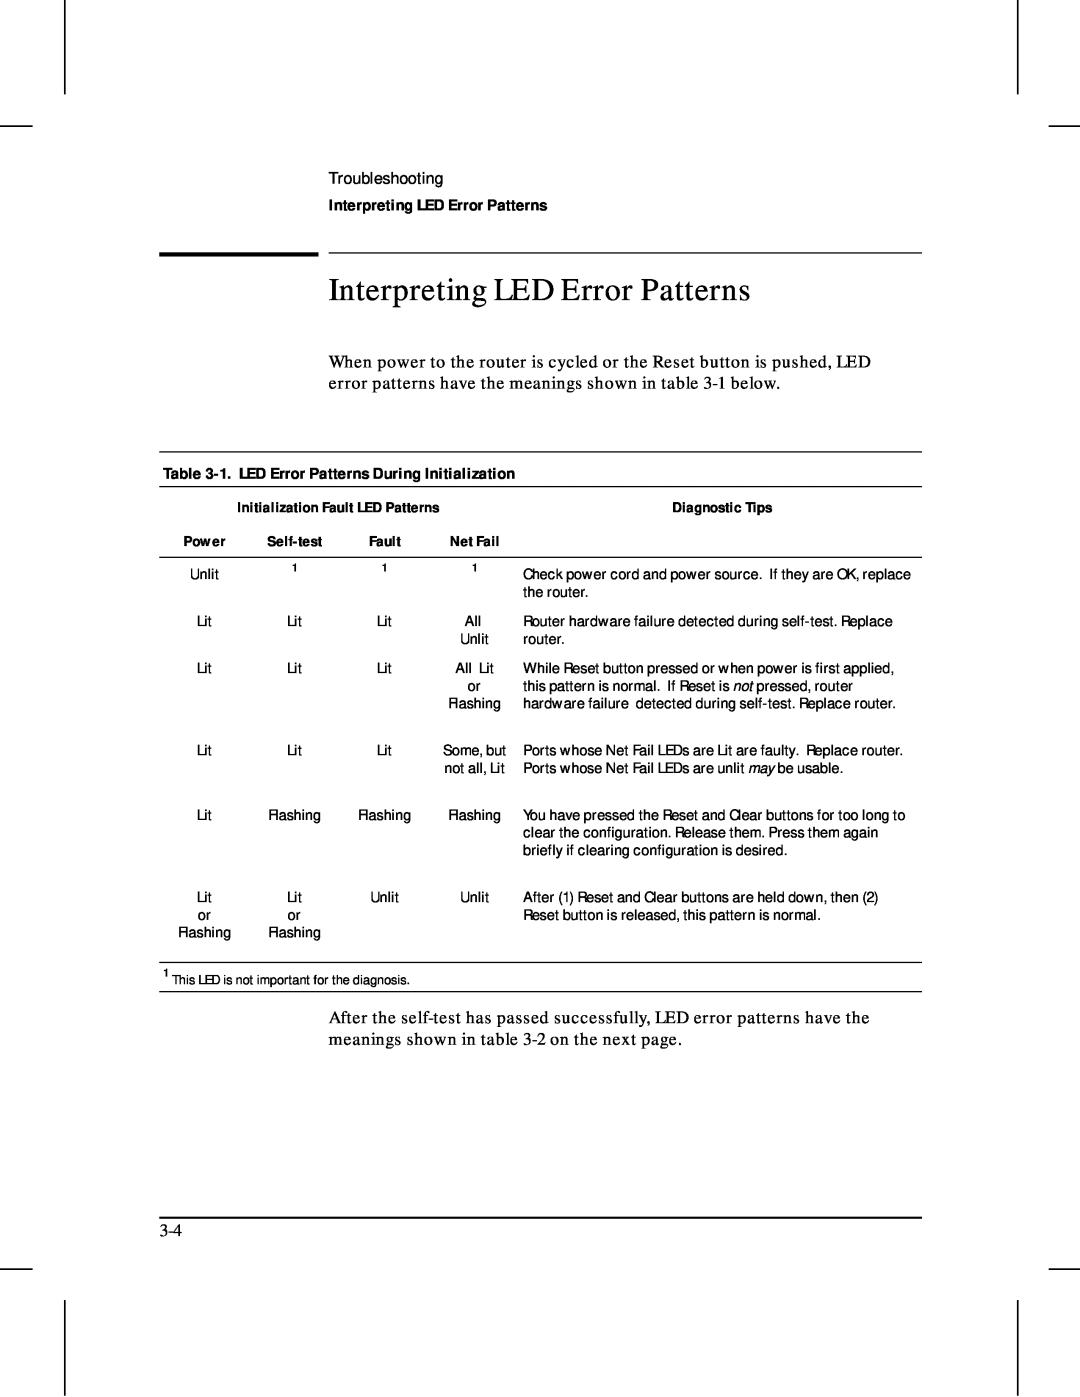 HP 480 manual Interpreting LED Error Patterns, 1. LED Error Patterns During Initialization 